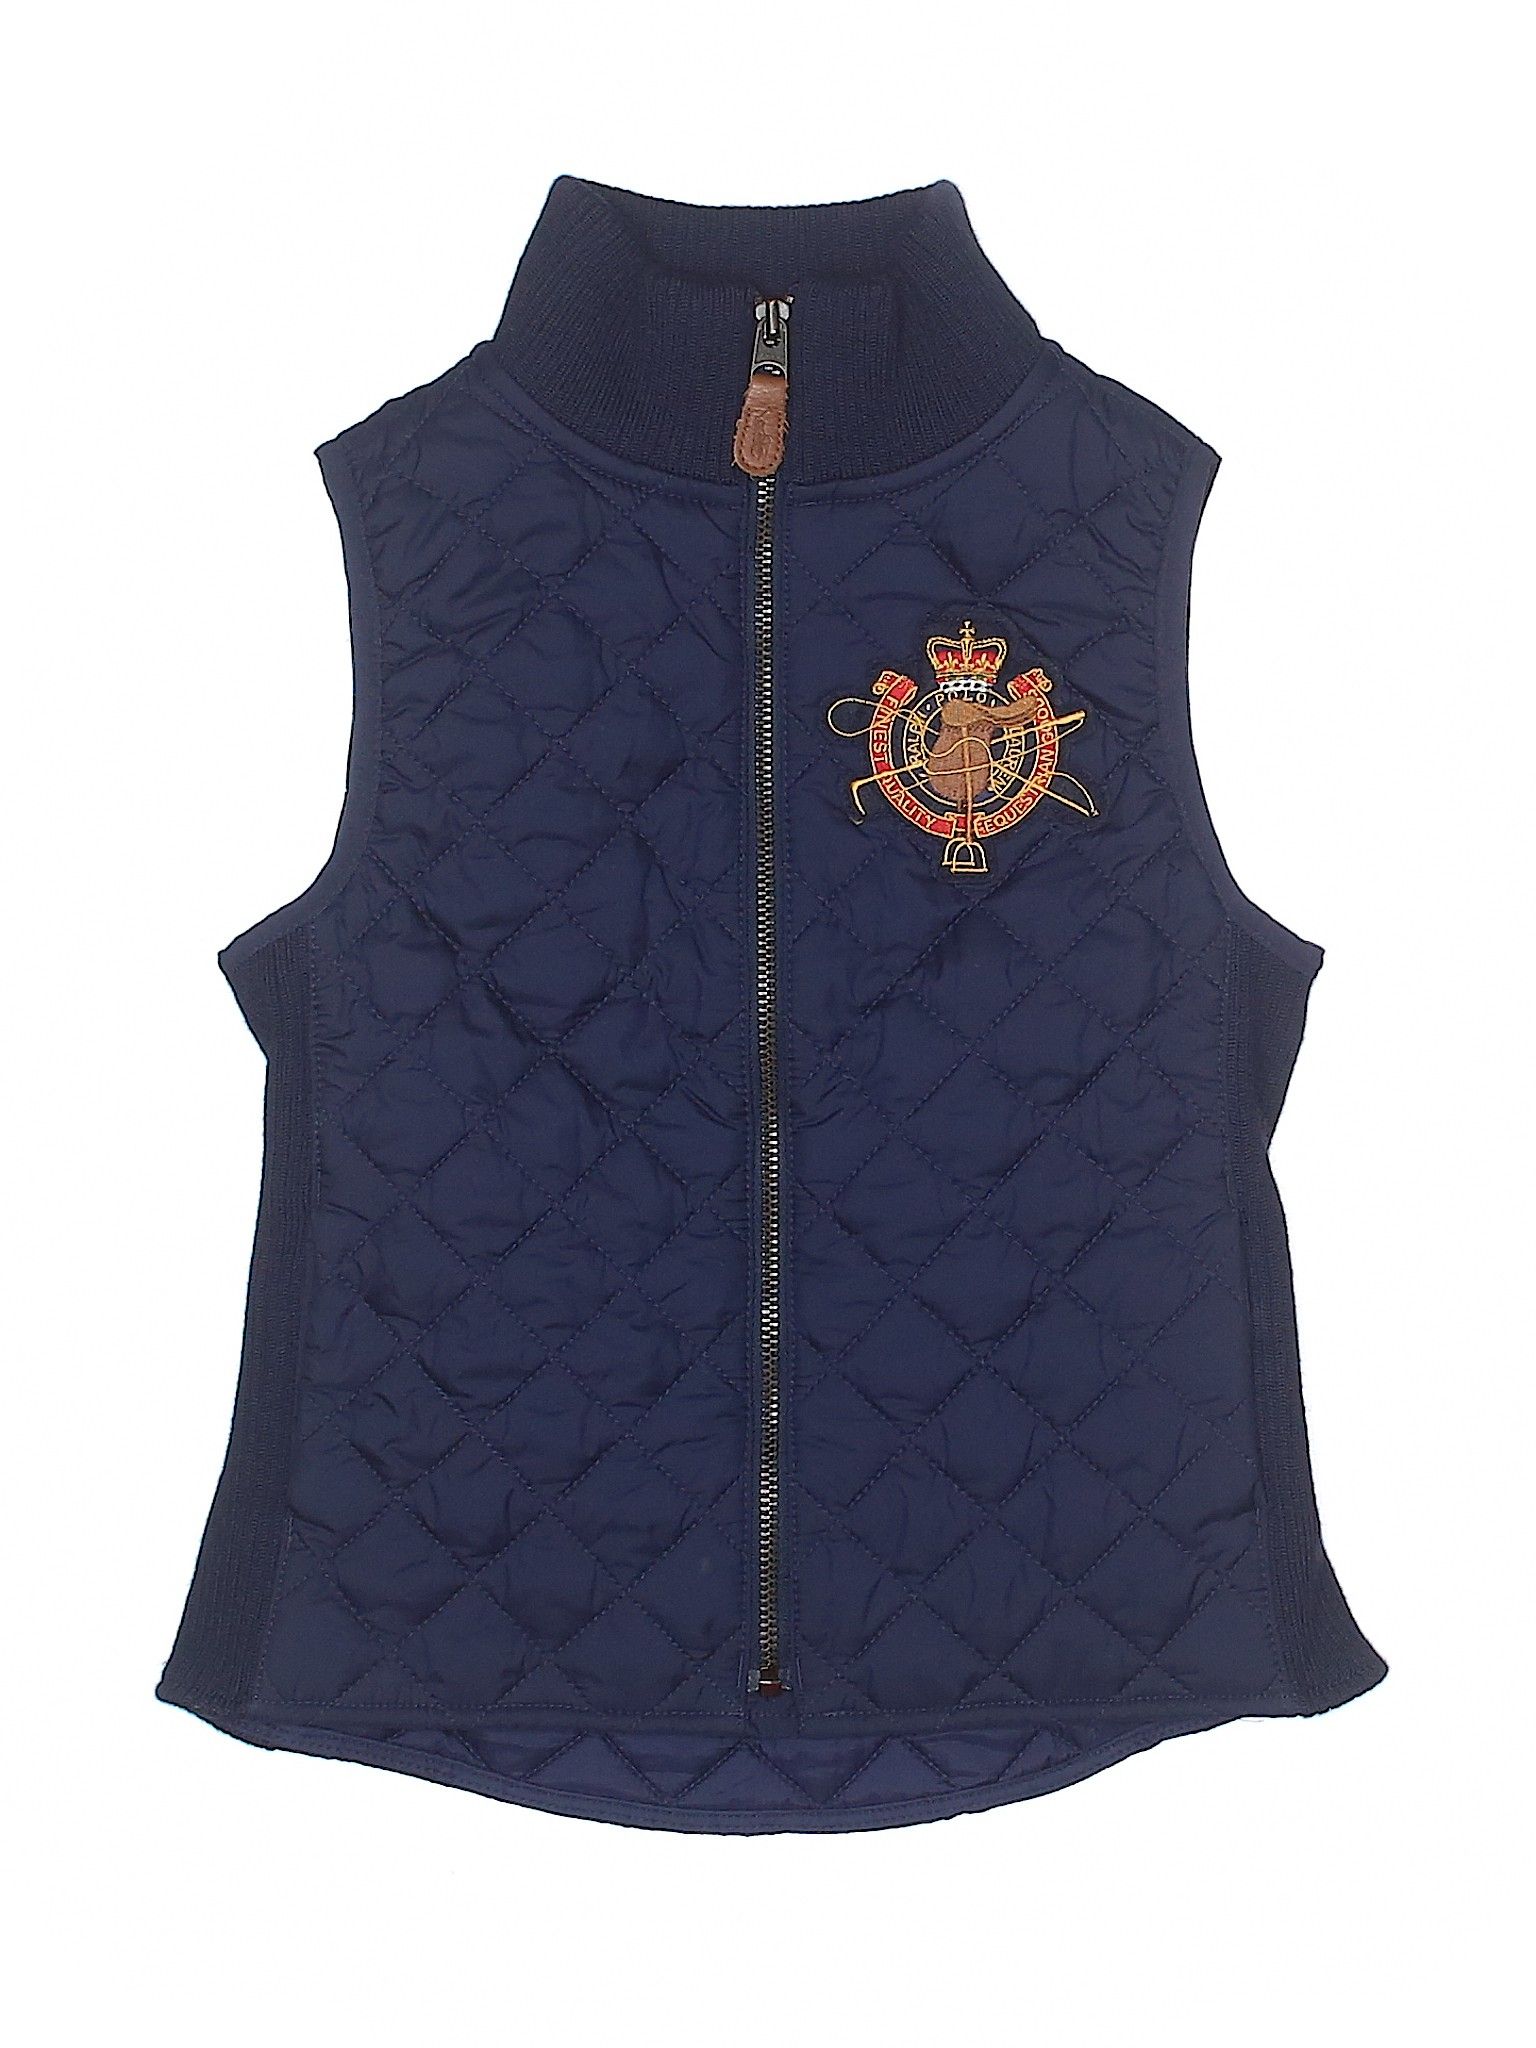 Ralph Lauren Vest Size 8: Blue Boys Jackets & Outerwear - 55559697 | thredUP